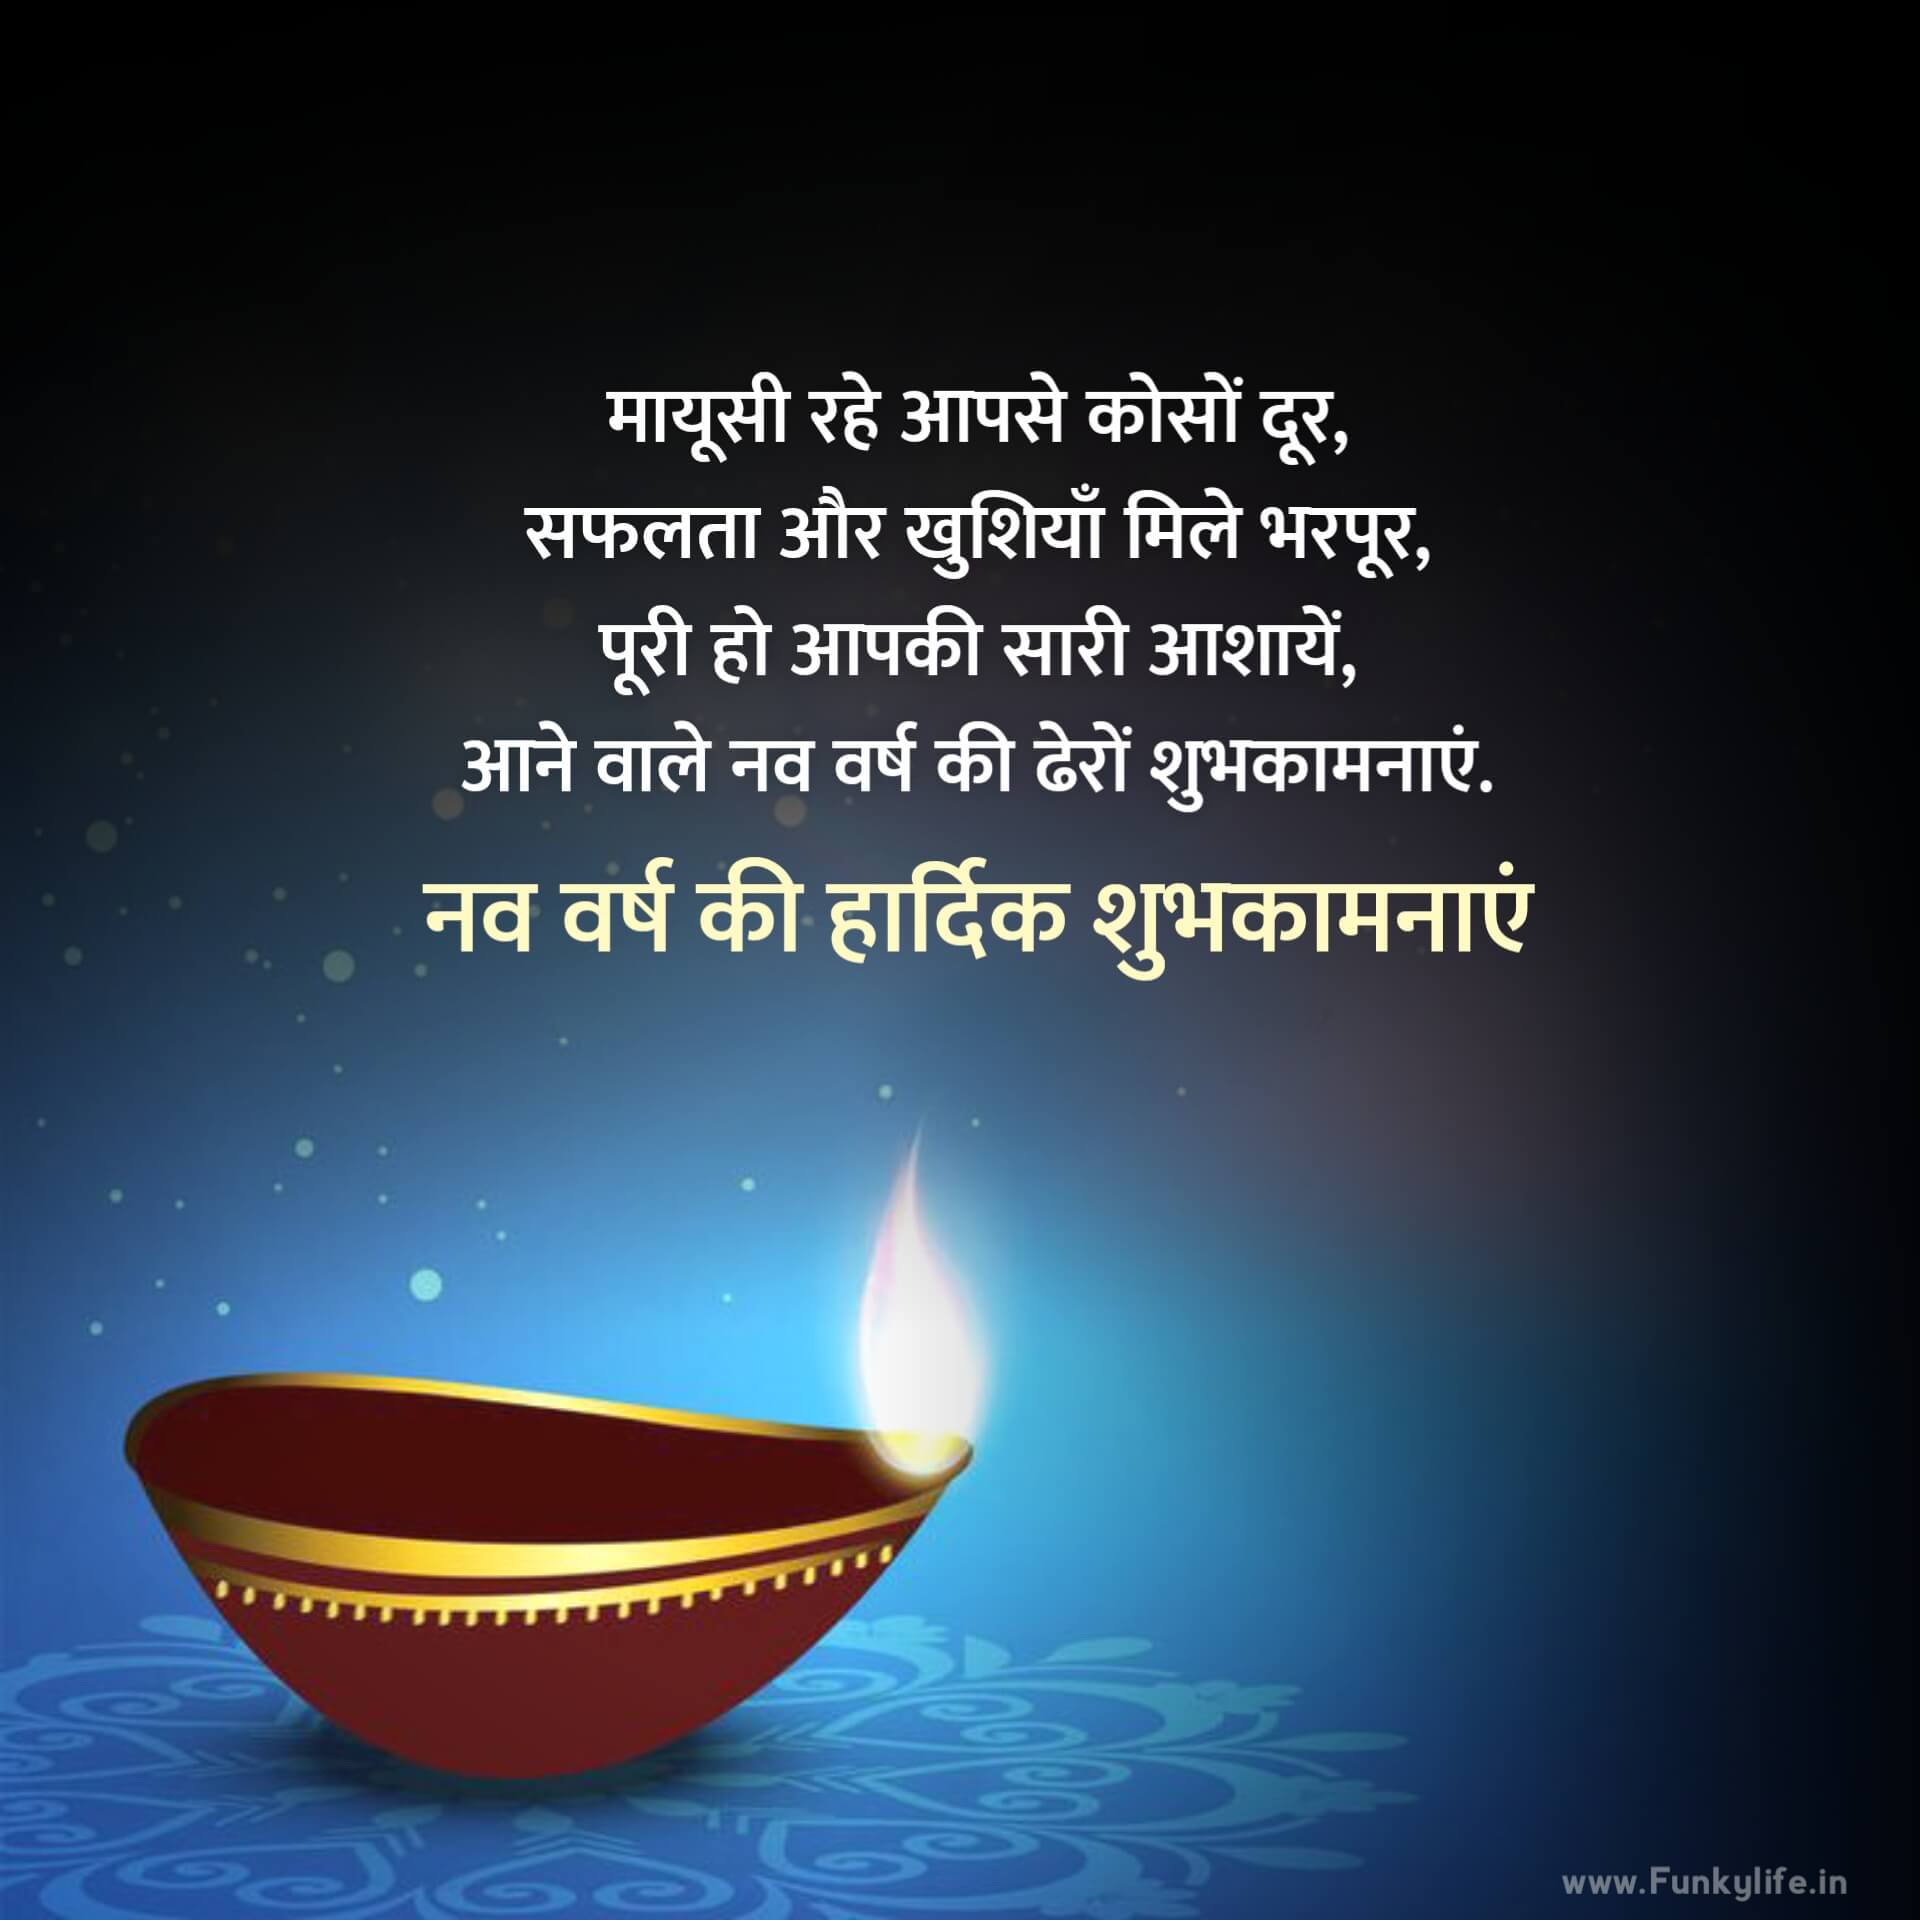 Best Hindi Happy New Year Wishes